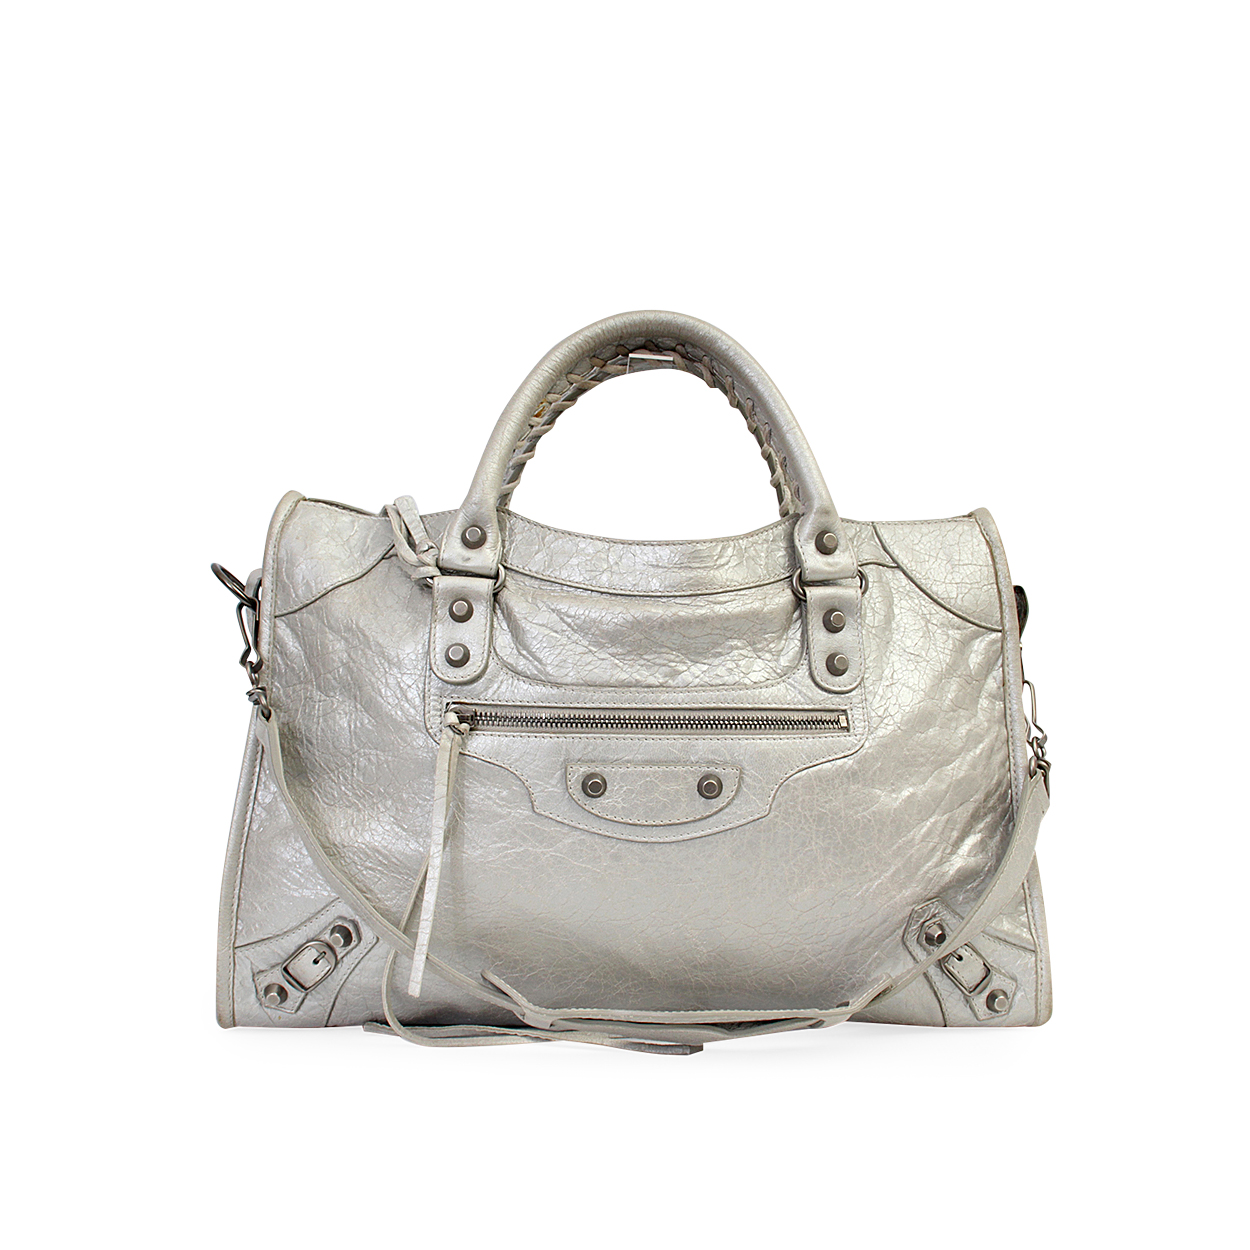 Balenciaga Releases Silver Metallic Edge City Bag for Prefall 2014   Spotted Fashion